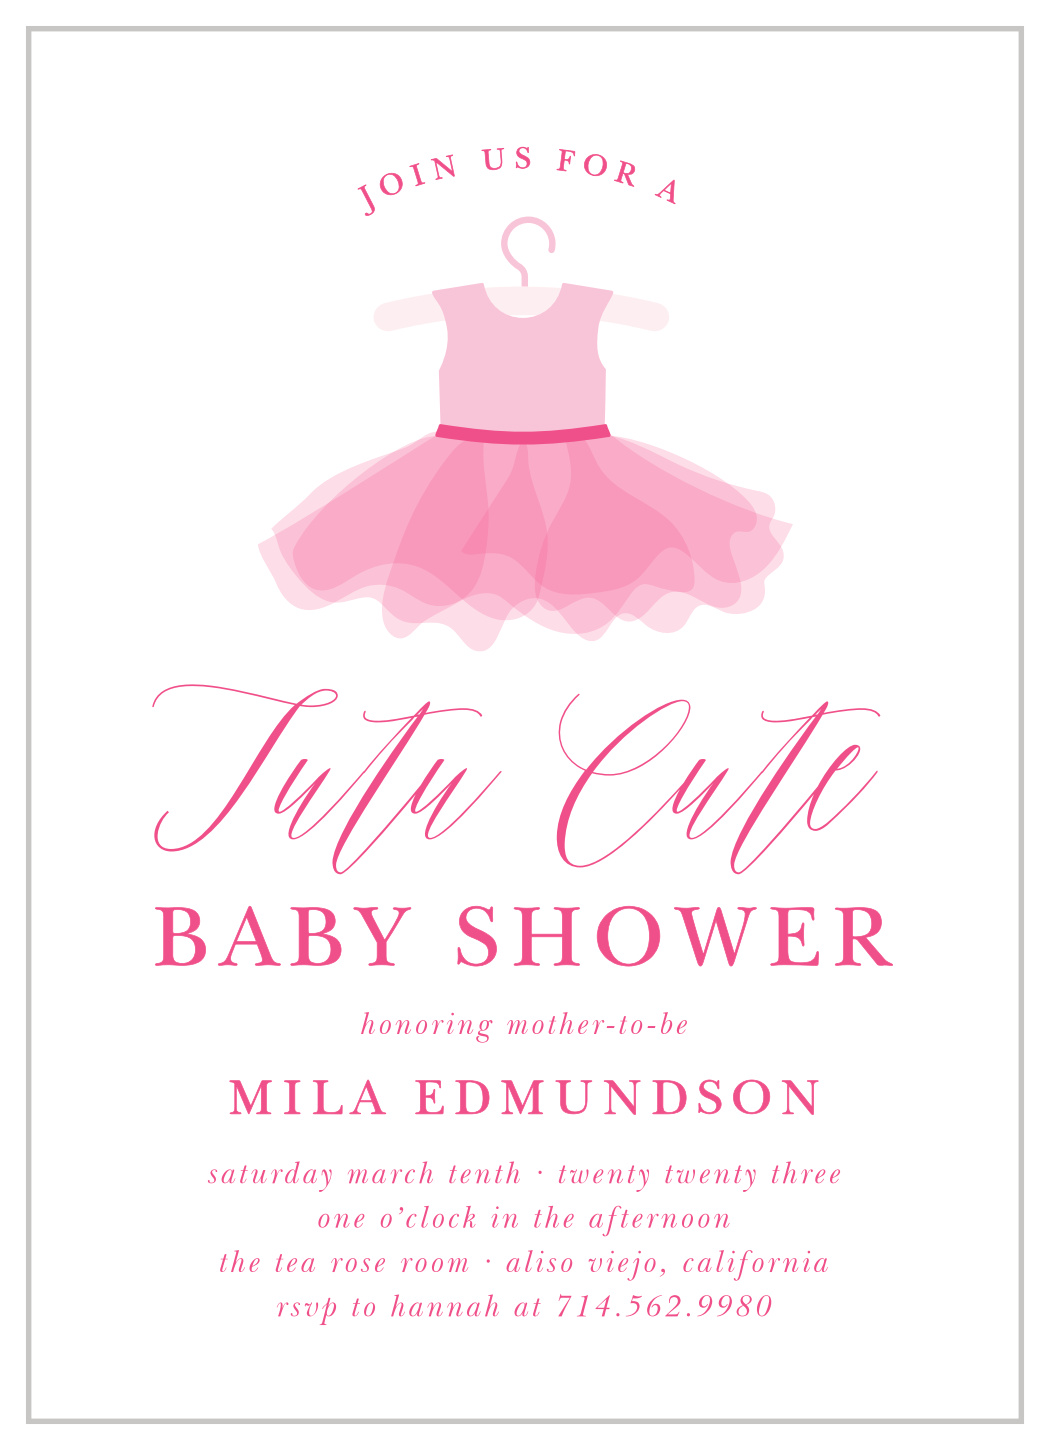 Ballerina Baby Shower Invitation Girl Tutu Baby Shower Invite Printed BSI053 Tutu Baby Shower Invitations Ballet Baby Shower Invites Pink